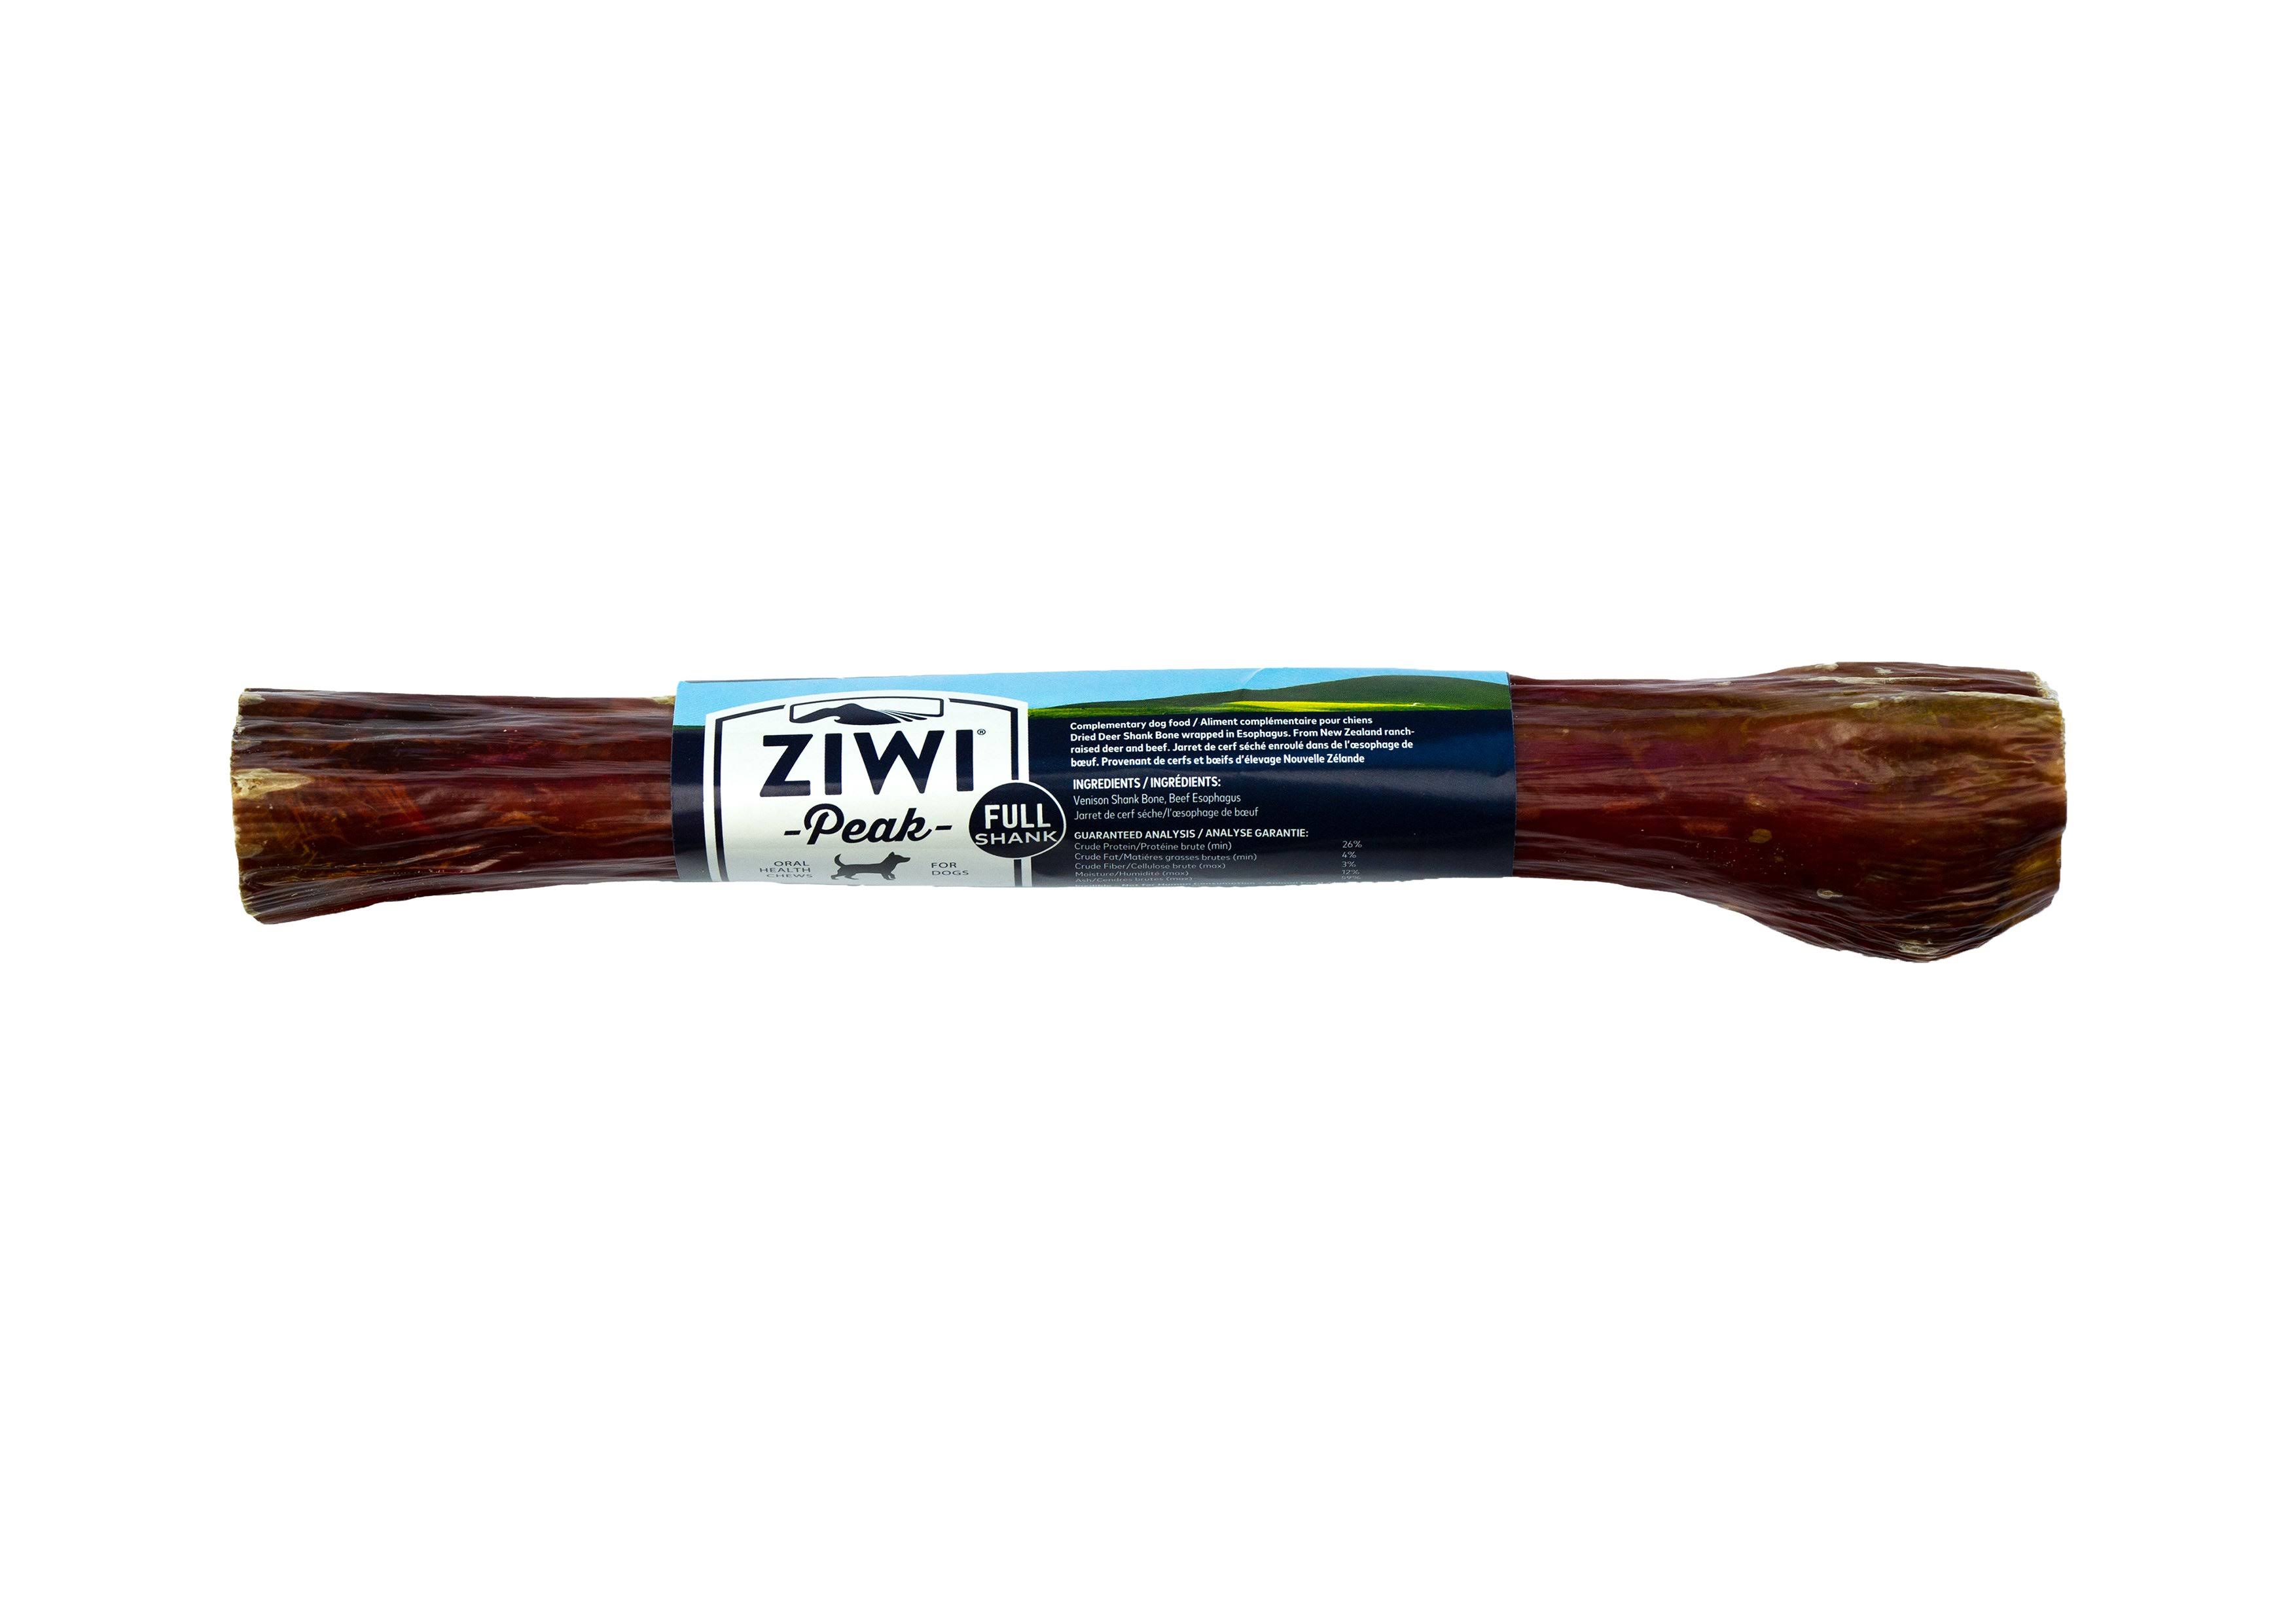 Ziwi Peak Deer Shank Bone Dog Chew - Full